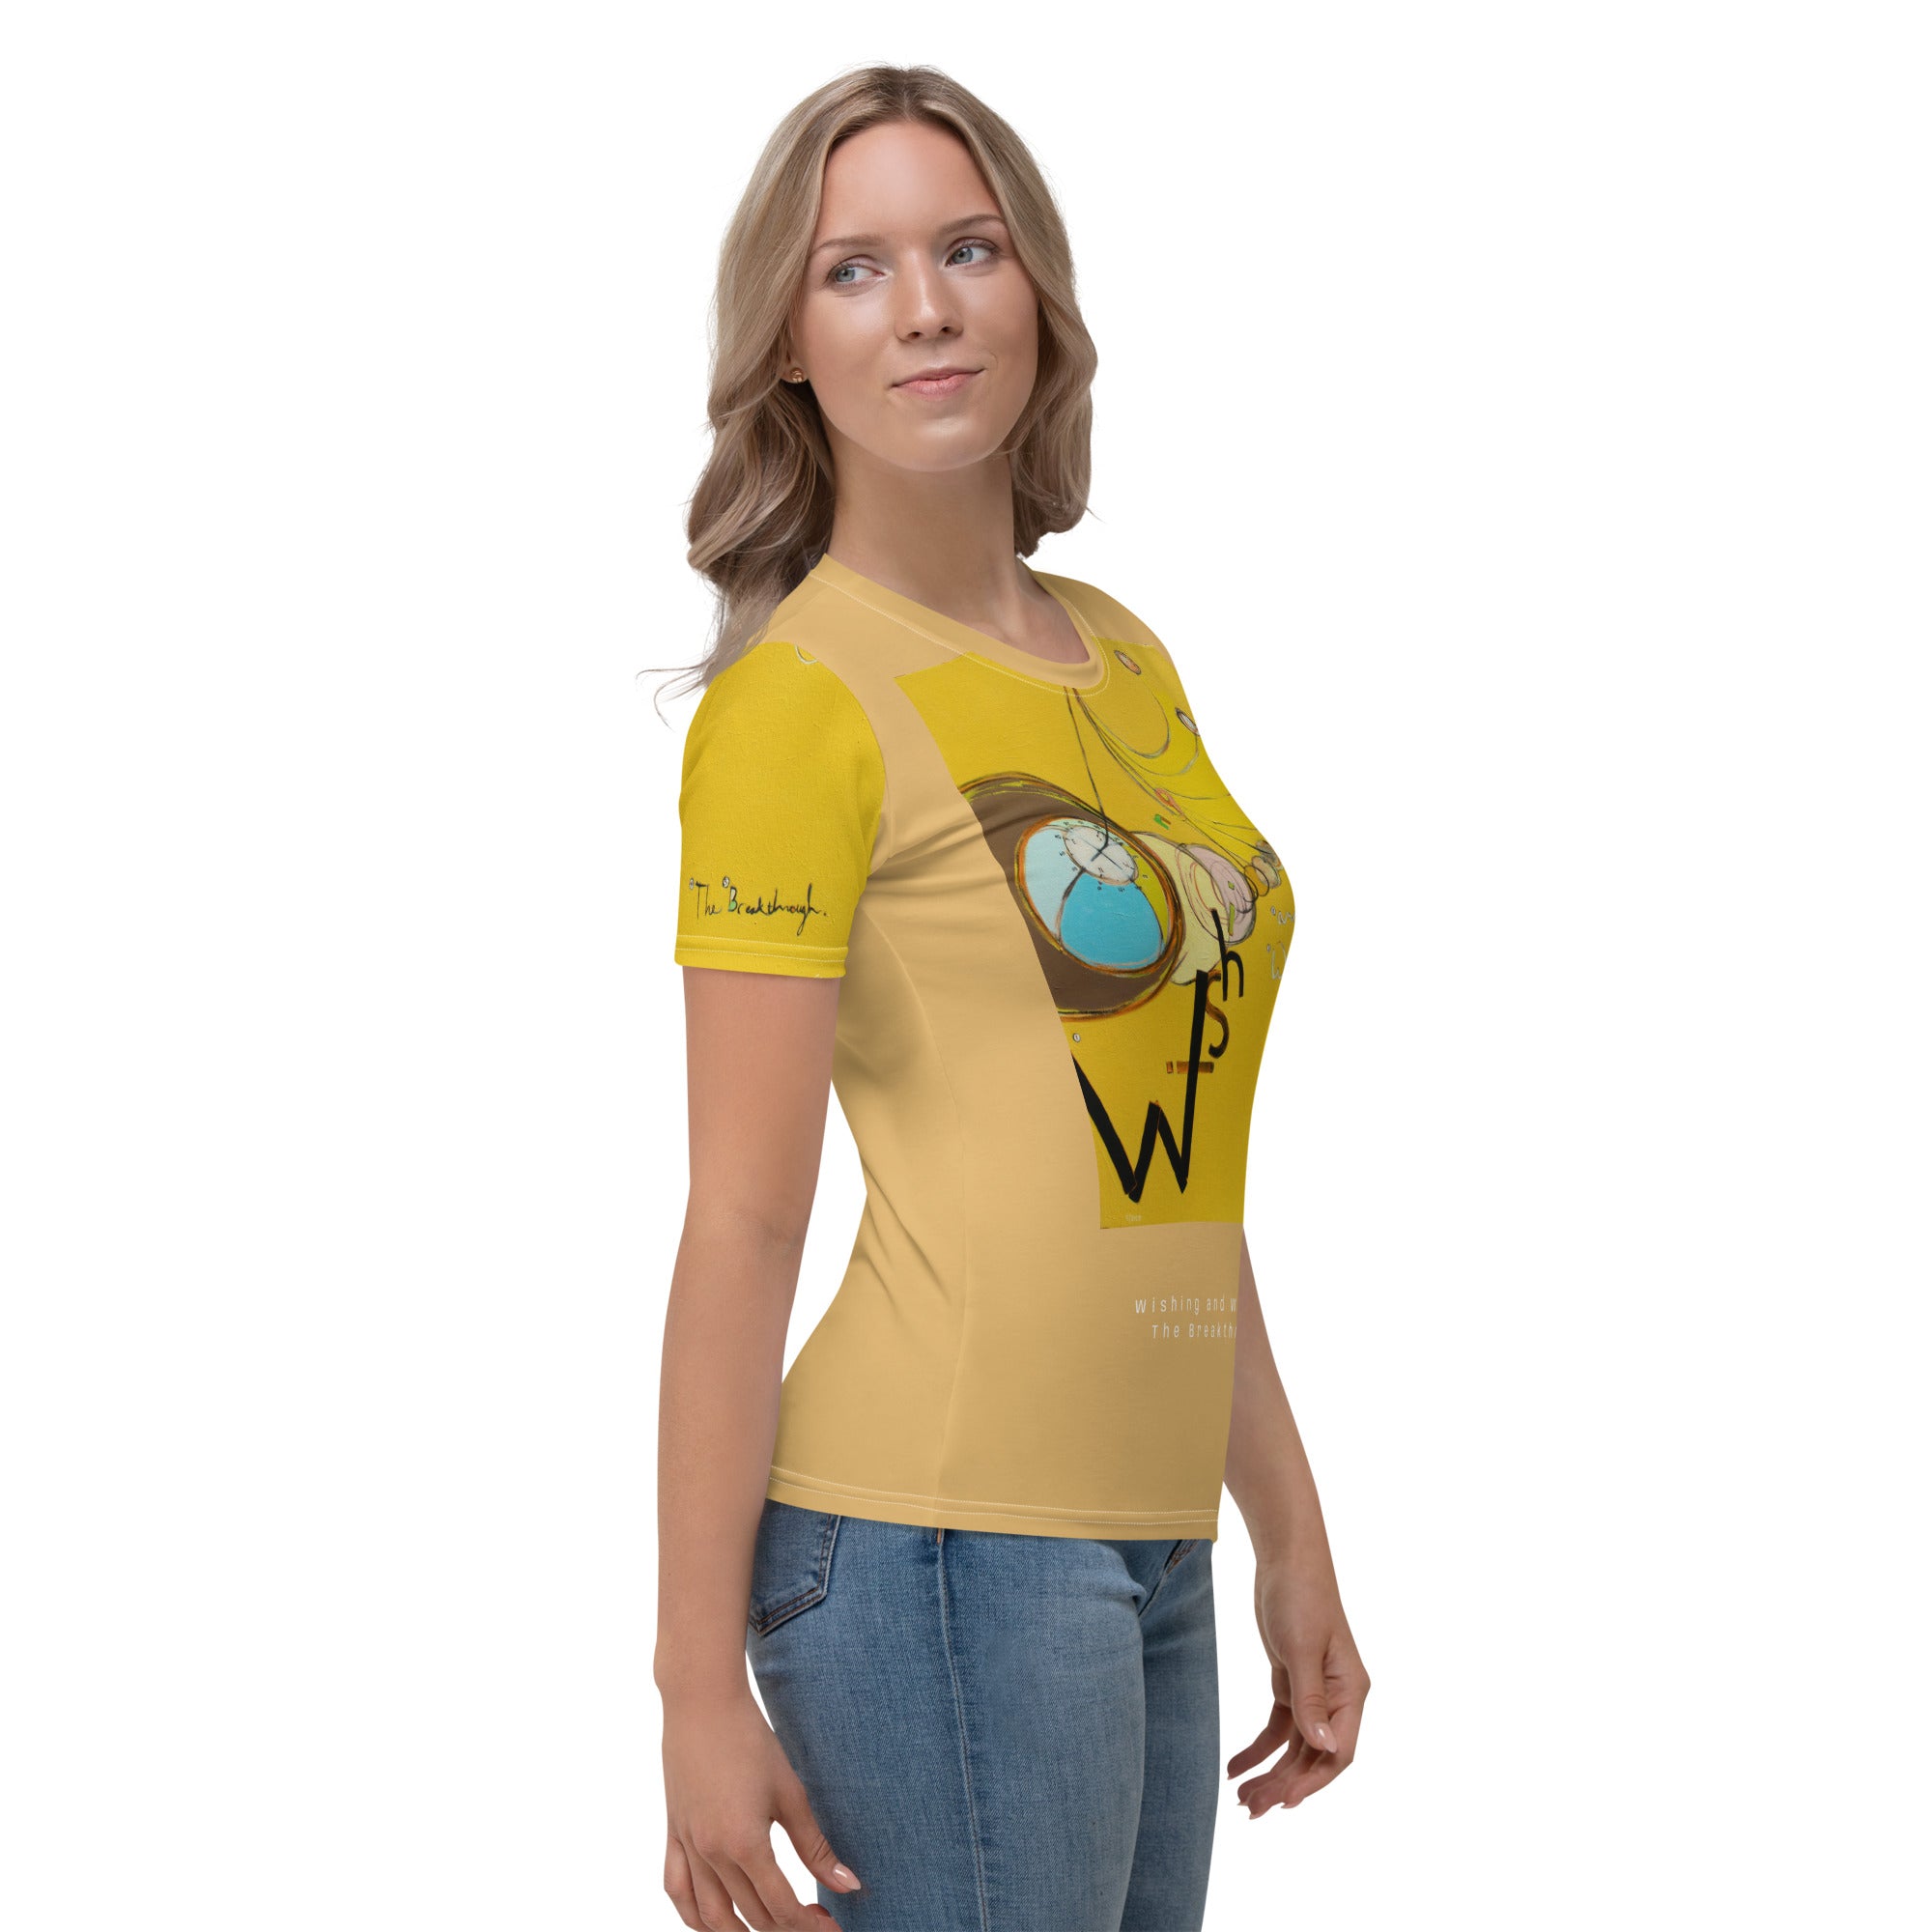 Wishing And Waiting - The Breakthrough #2 [Women's T-shirt]